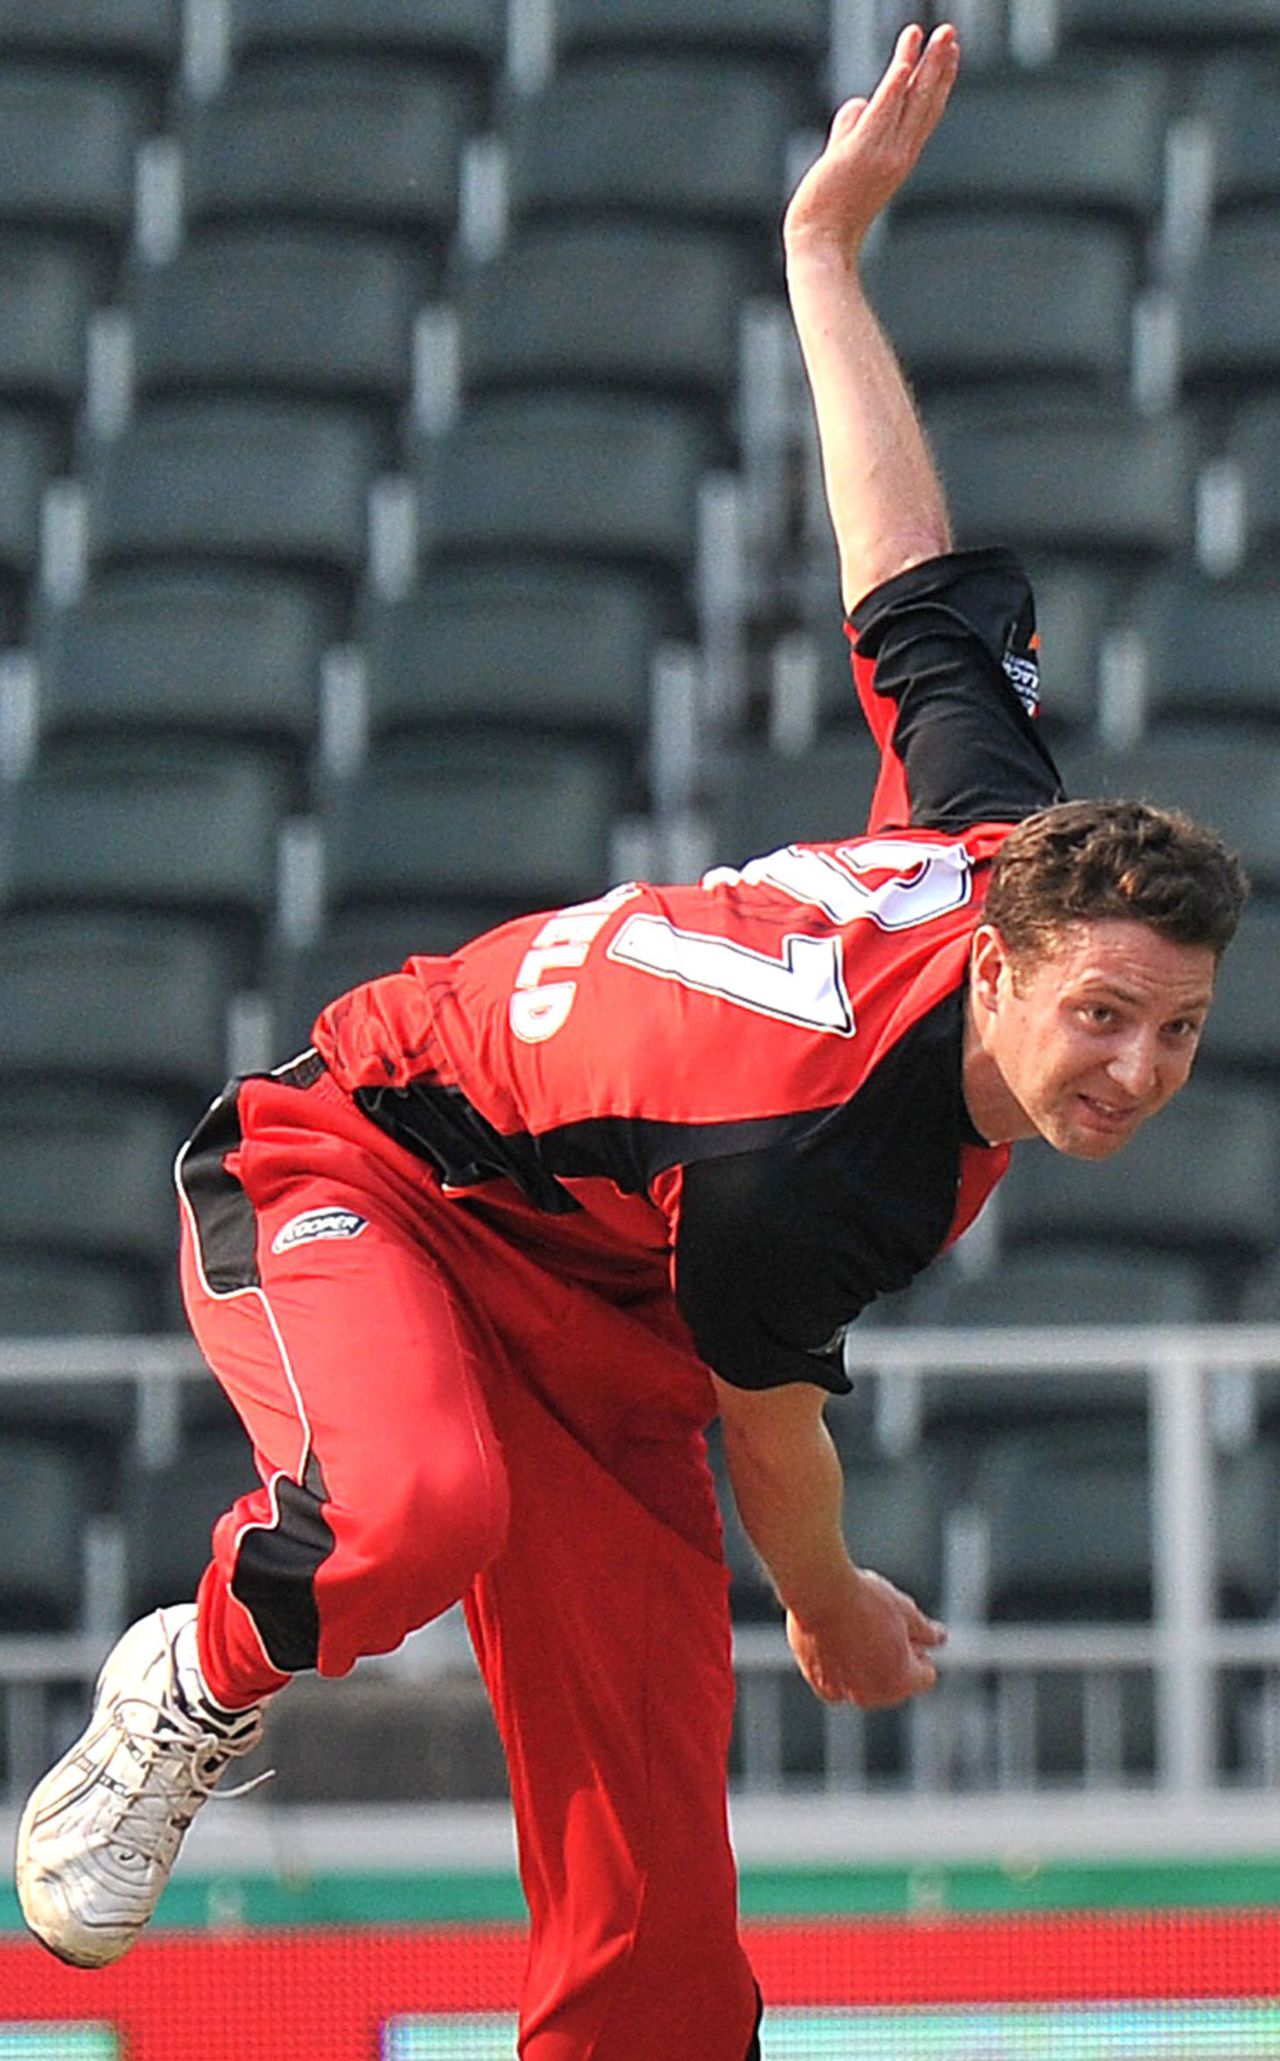 Jake Haberfield struck in the first over, Guyana v South Australia, Champions League Twenty20, Johannesburg, September 21, 2010